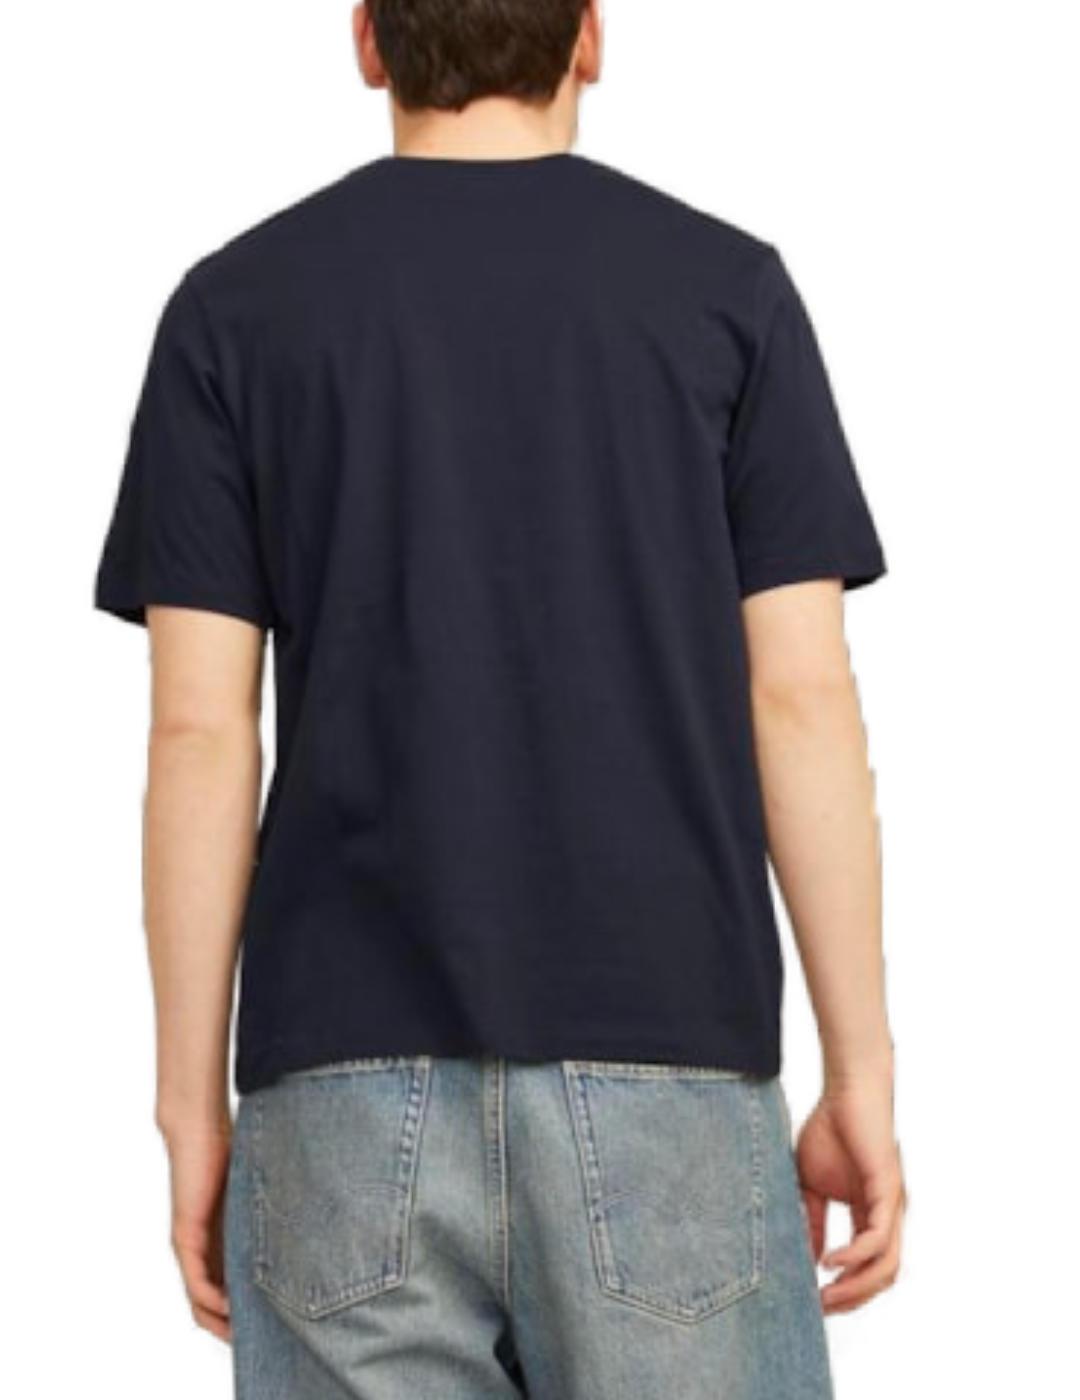 Camiseta Jack&Jones Logo azul marino manga corta para hombre